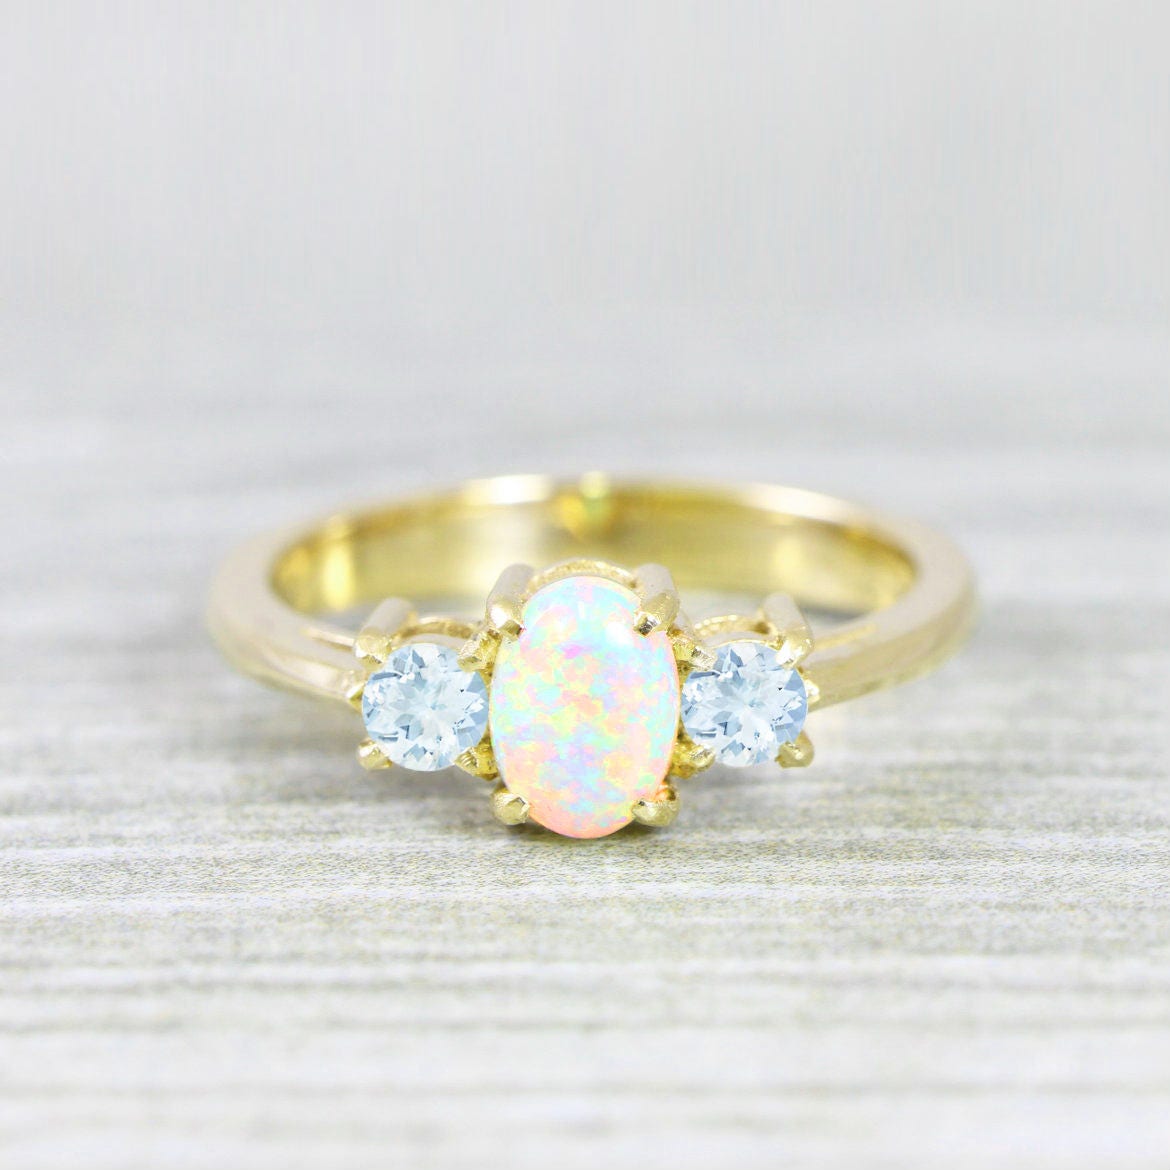 Opal and aquamarine engagement ring handmade trilogy three